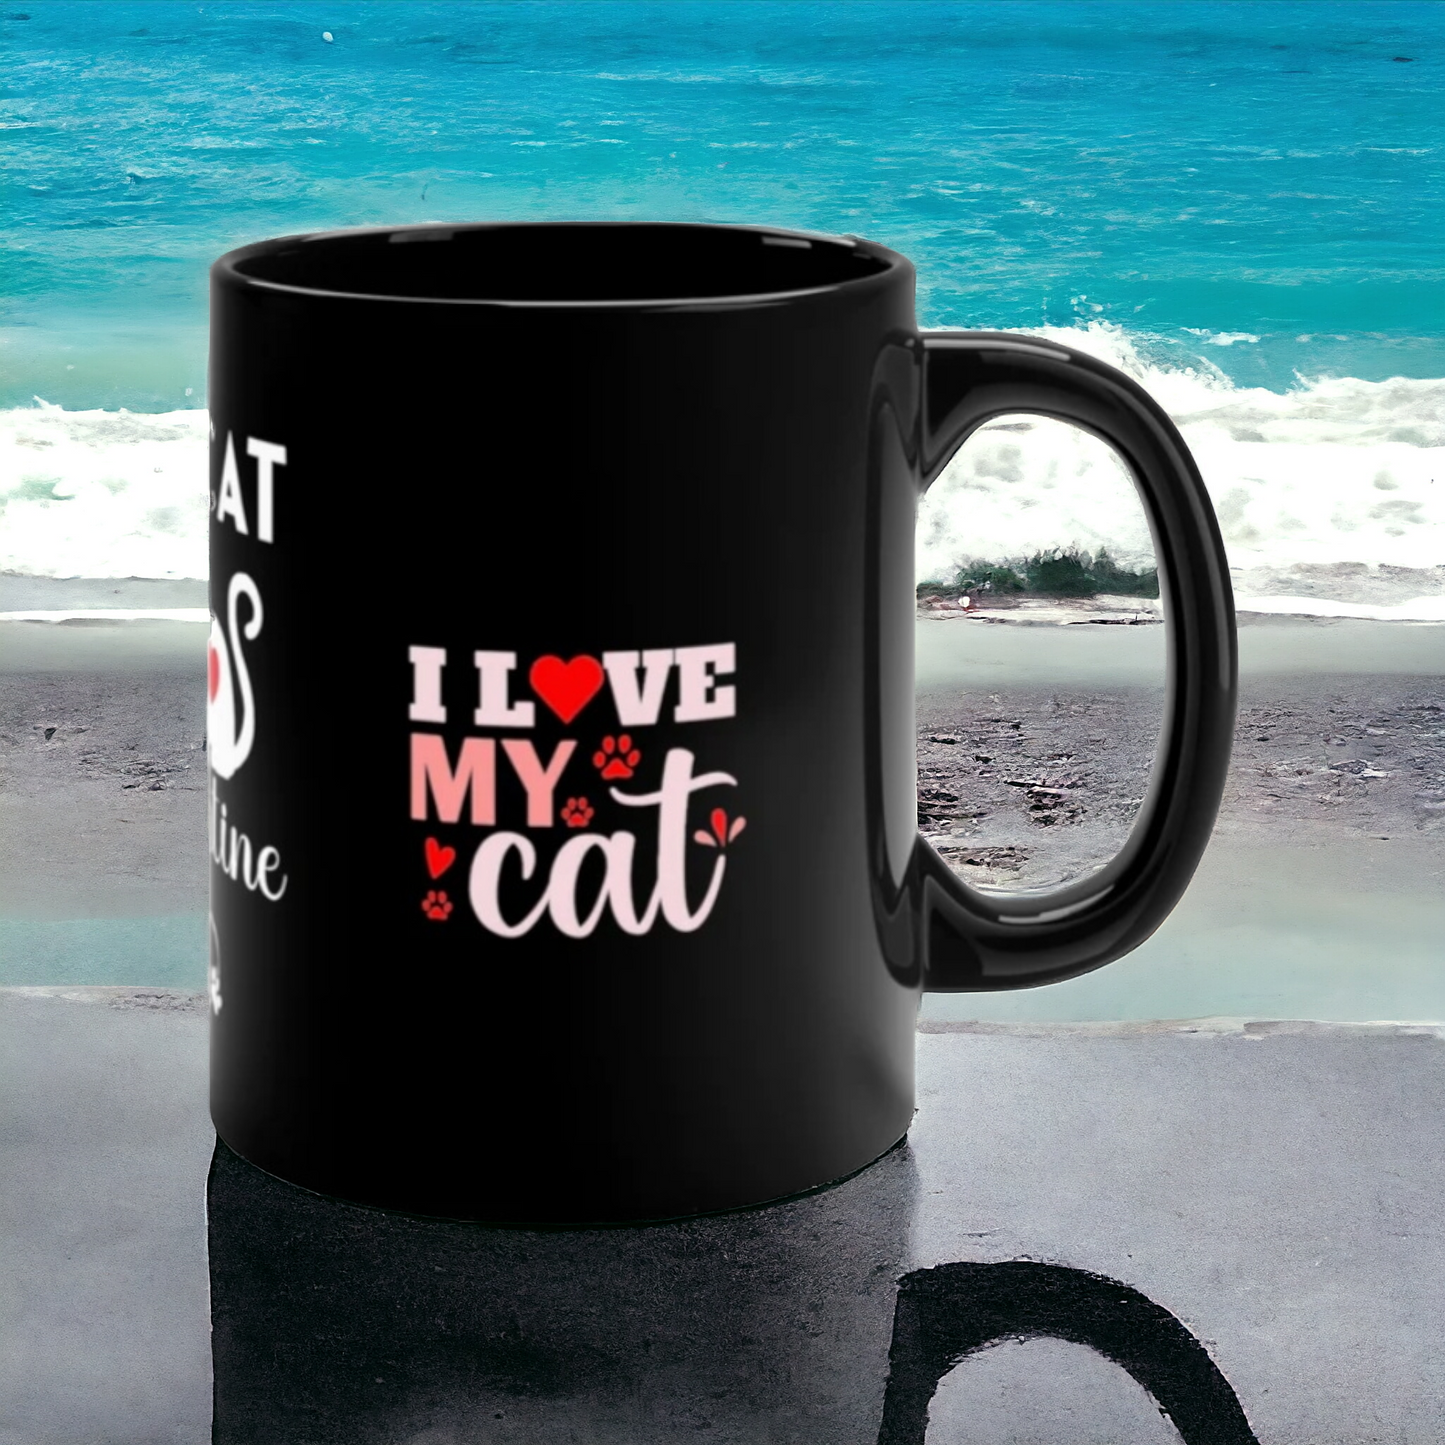 VALENTINE CAT MUG - My Cat is my Valentine Coffee Mug - Mugscity